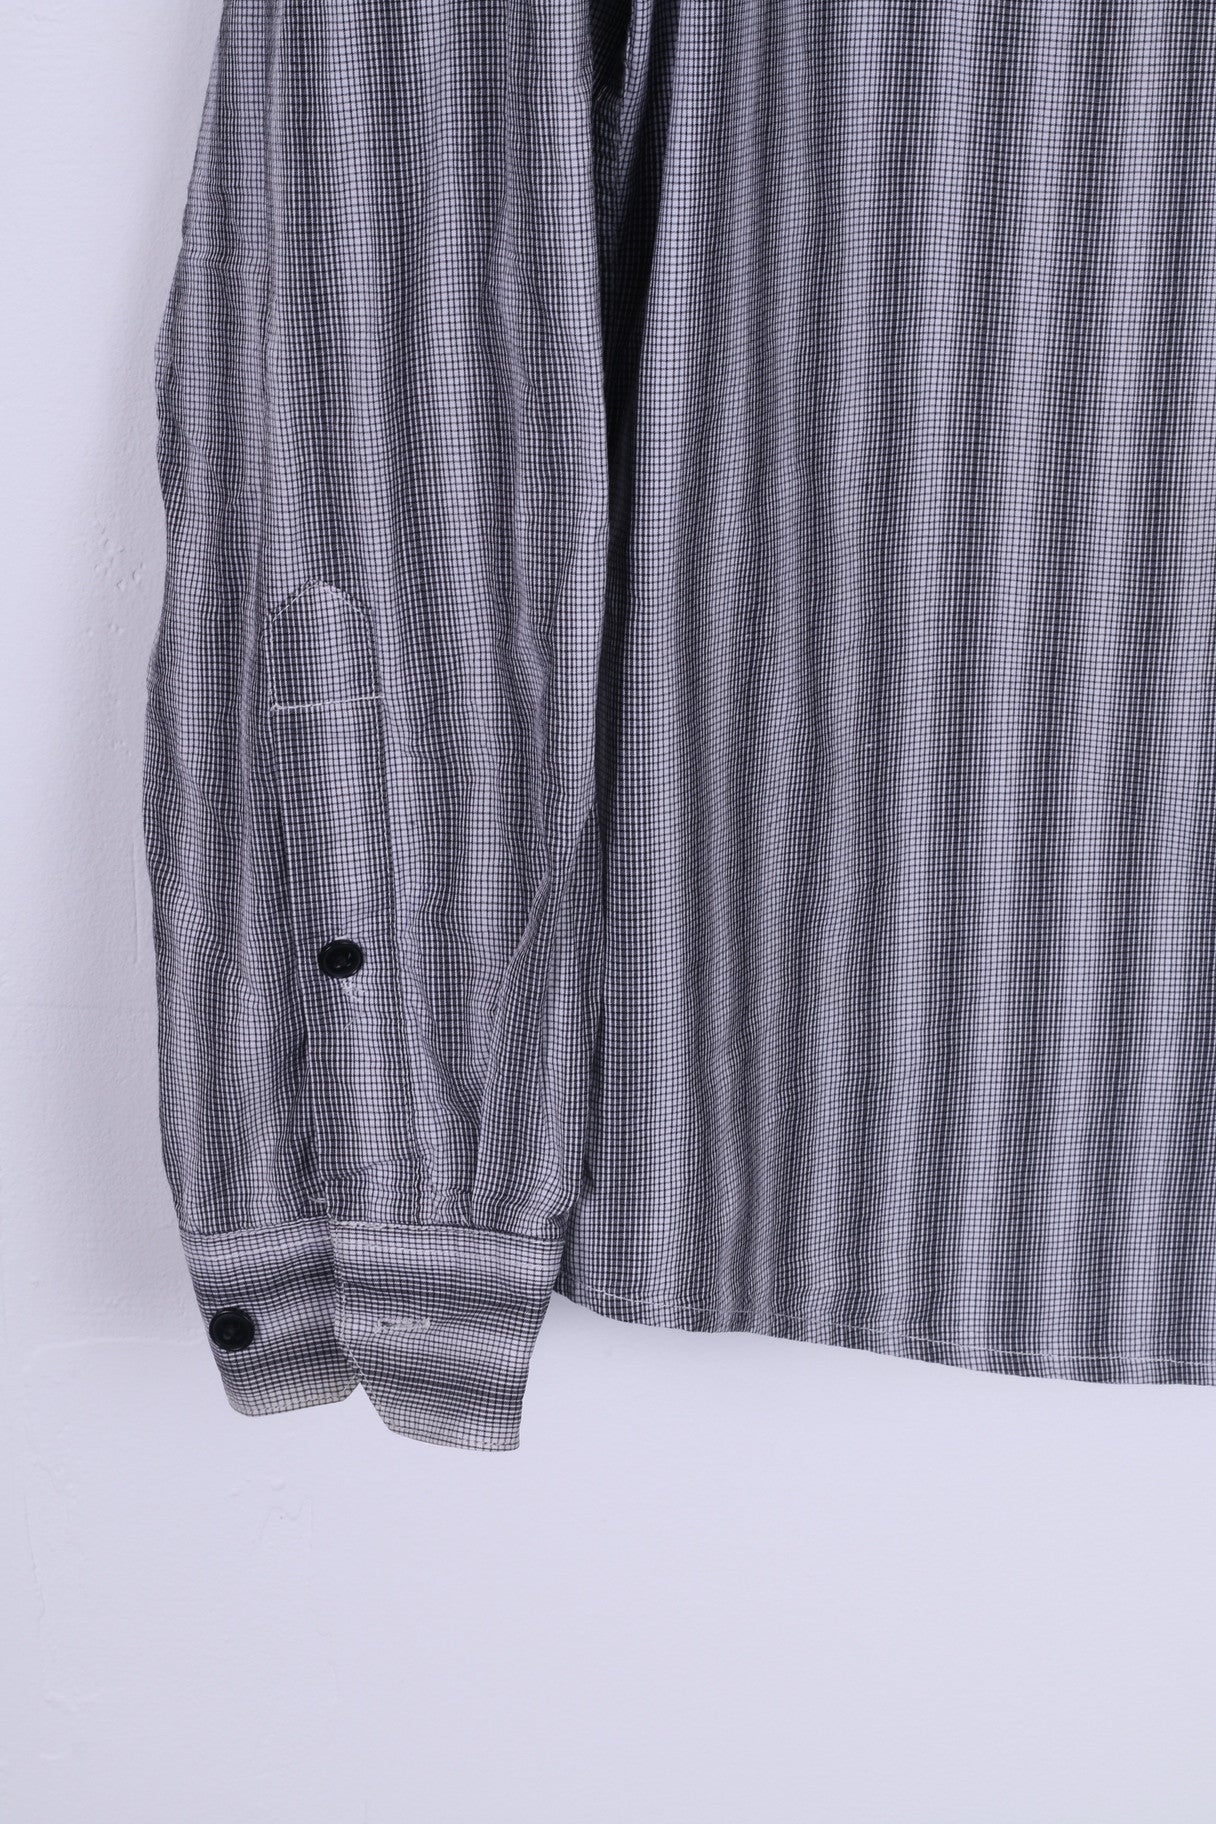 H&M Mens L (M) Casual Shirt Black White Striped Cotton Long Sleeve